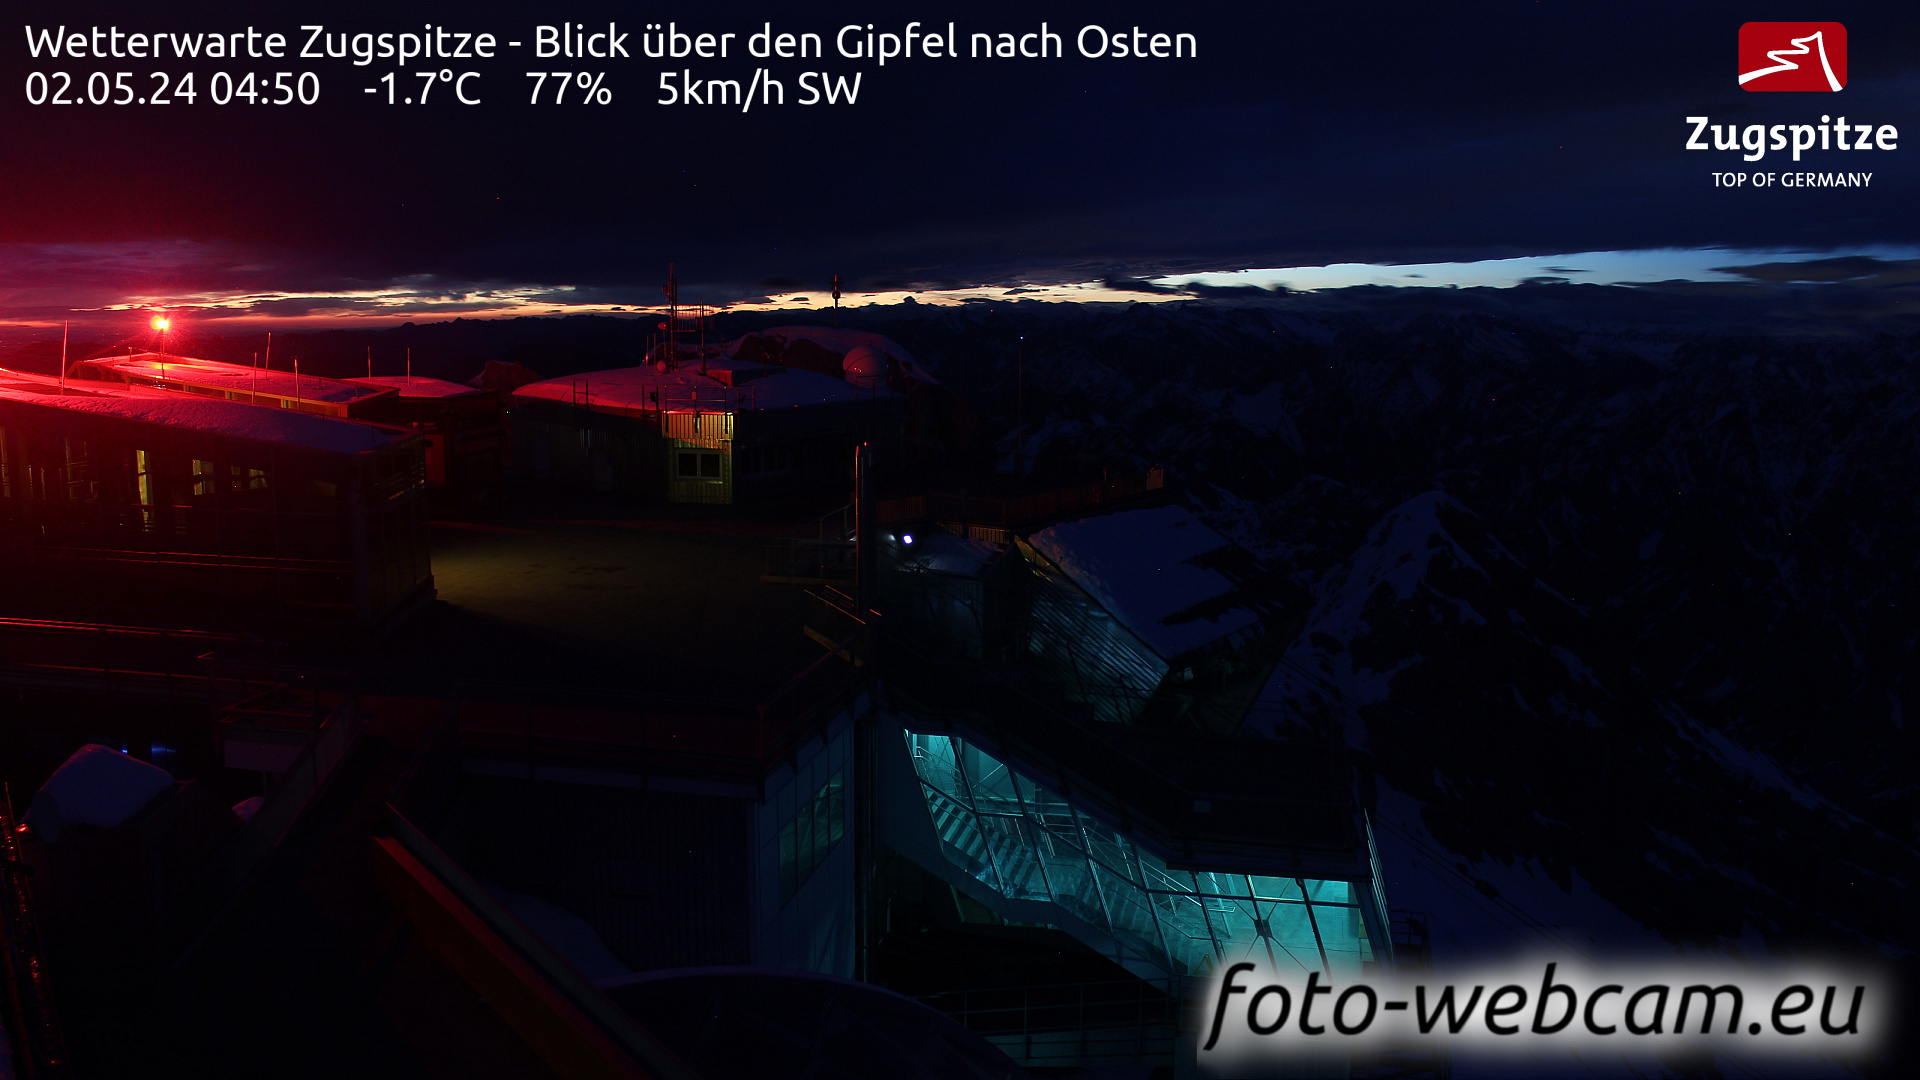 Zugspitze Sun. 04:55